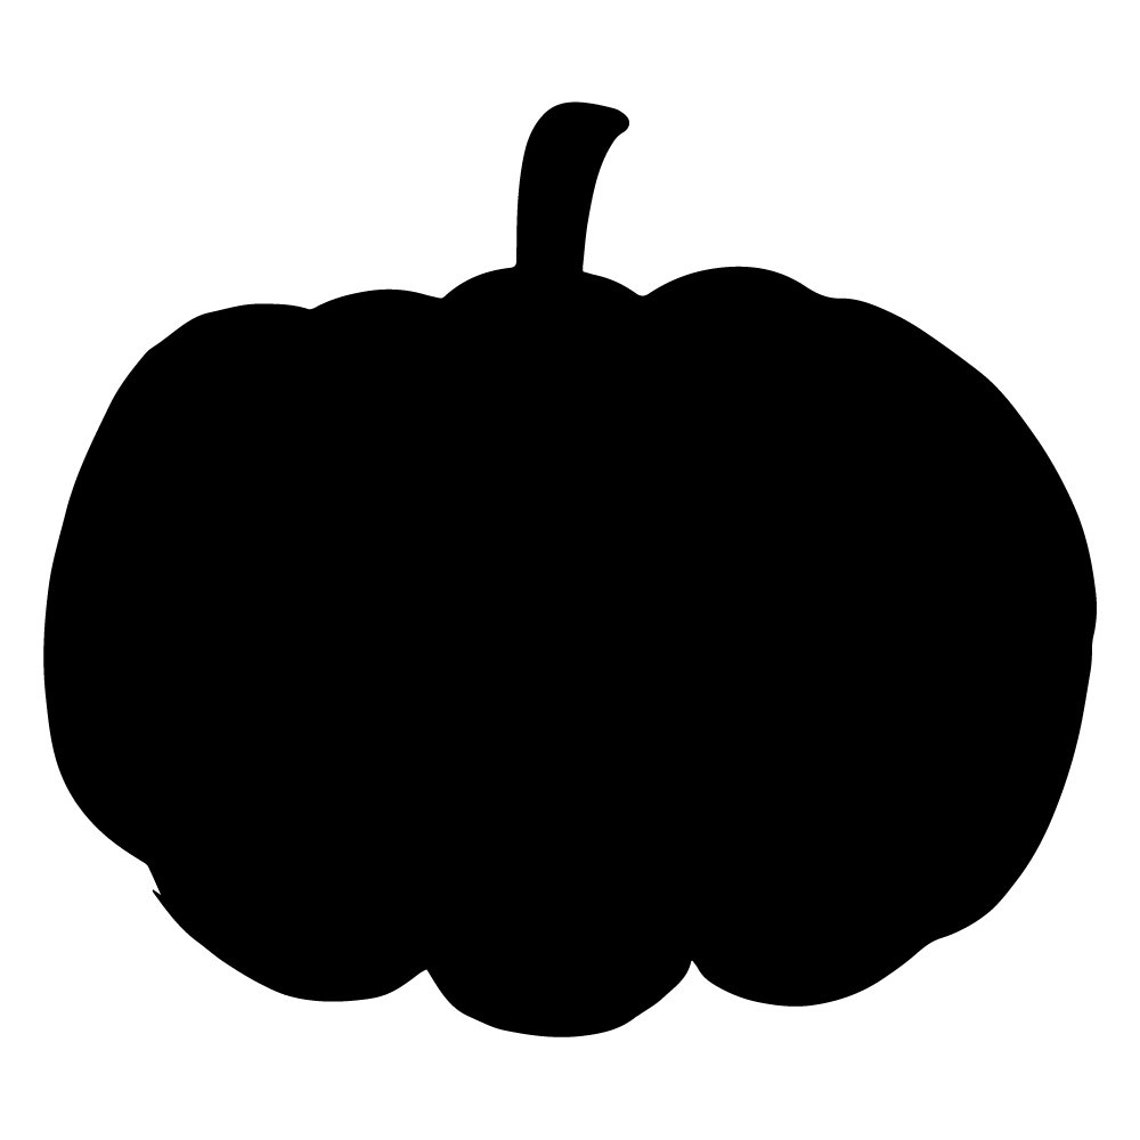 Set of vegetable & fruit silhouette SVG Vector esp 10 jpeg | Etsy